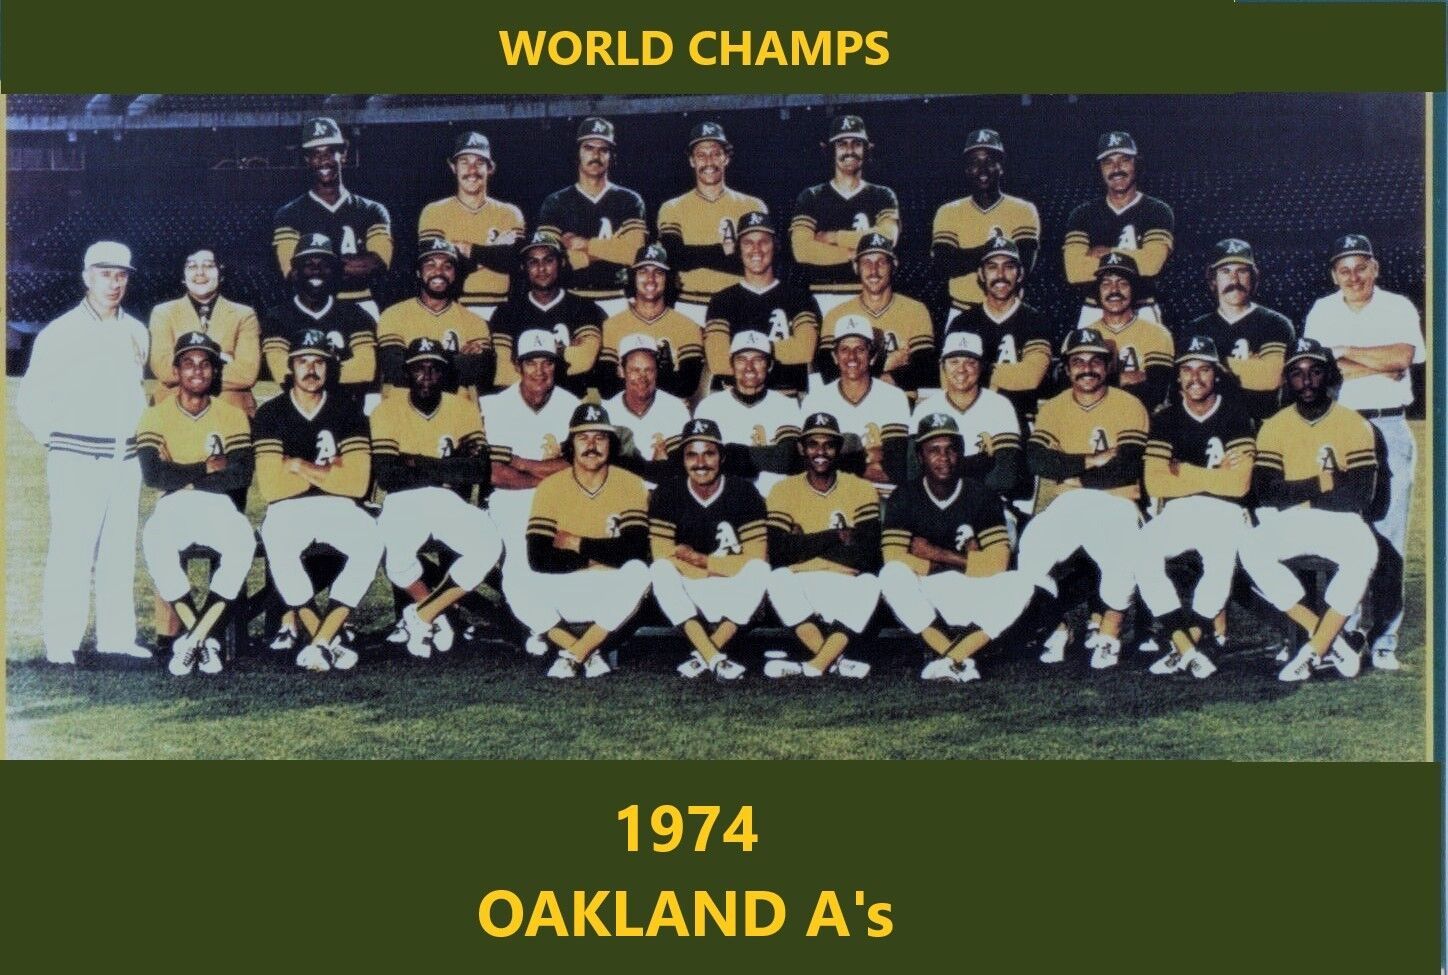 1974 OAKLAND ATHLETICS A's 8X10 TEAM PHOTO MLB BASEBALL PICTURE WORLD CHAMPS - $4.94